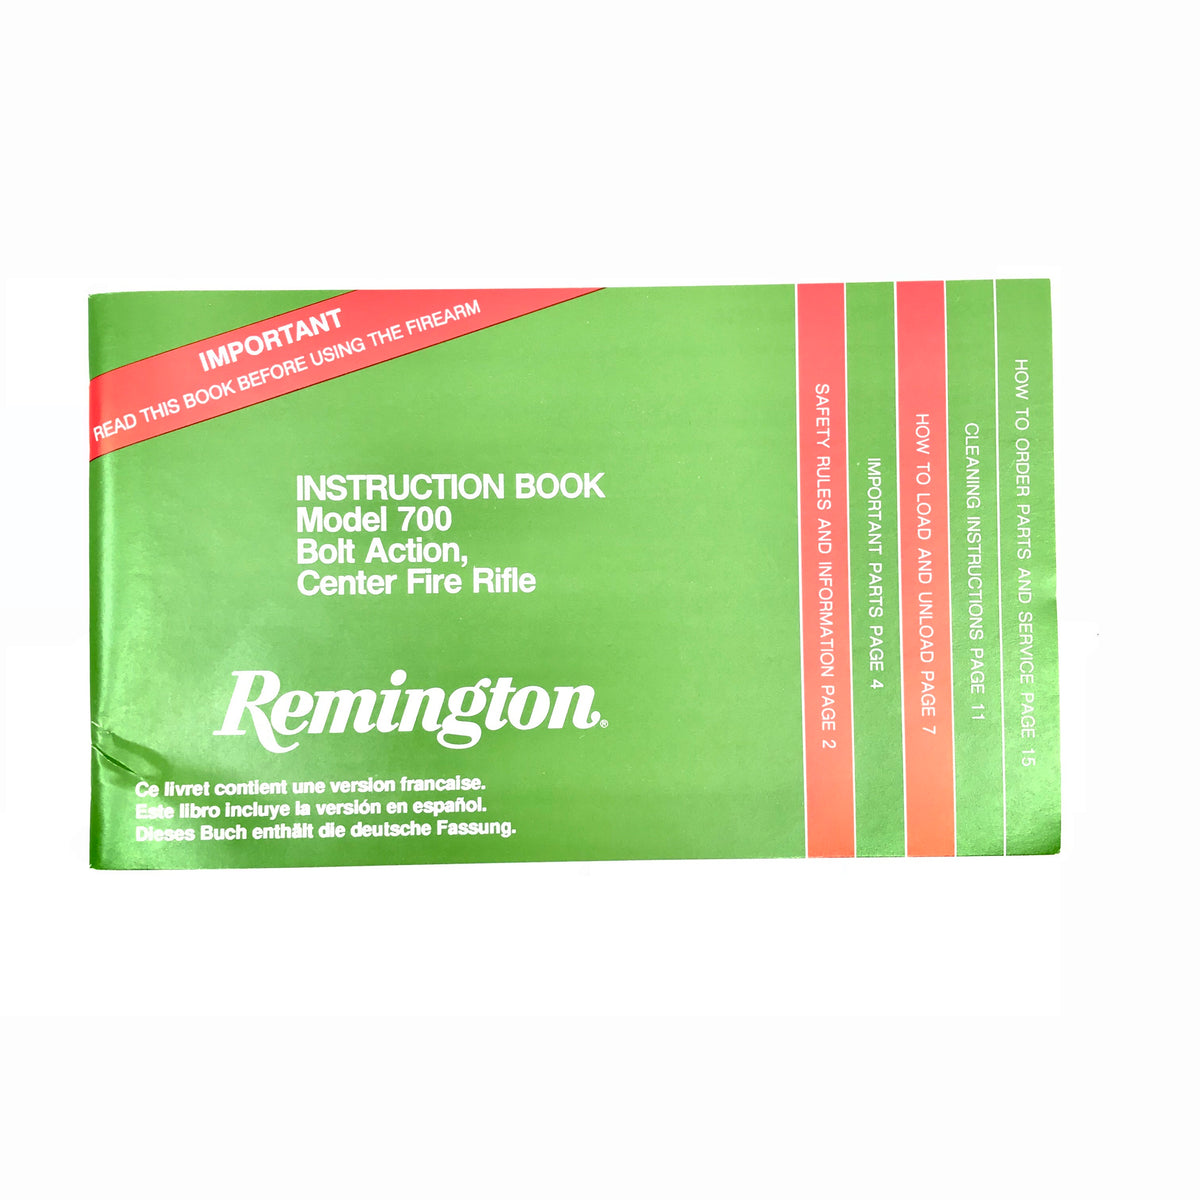 Remington Model 700 Bolt Action Center Fire Rifle Instruction Book